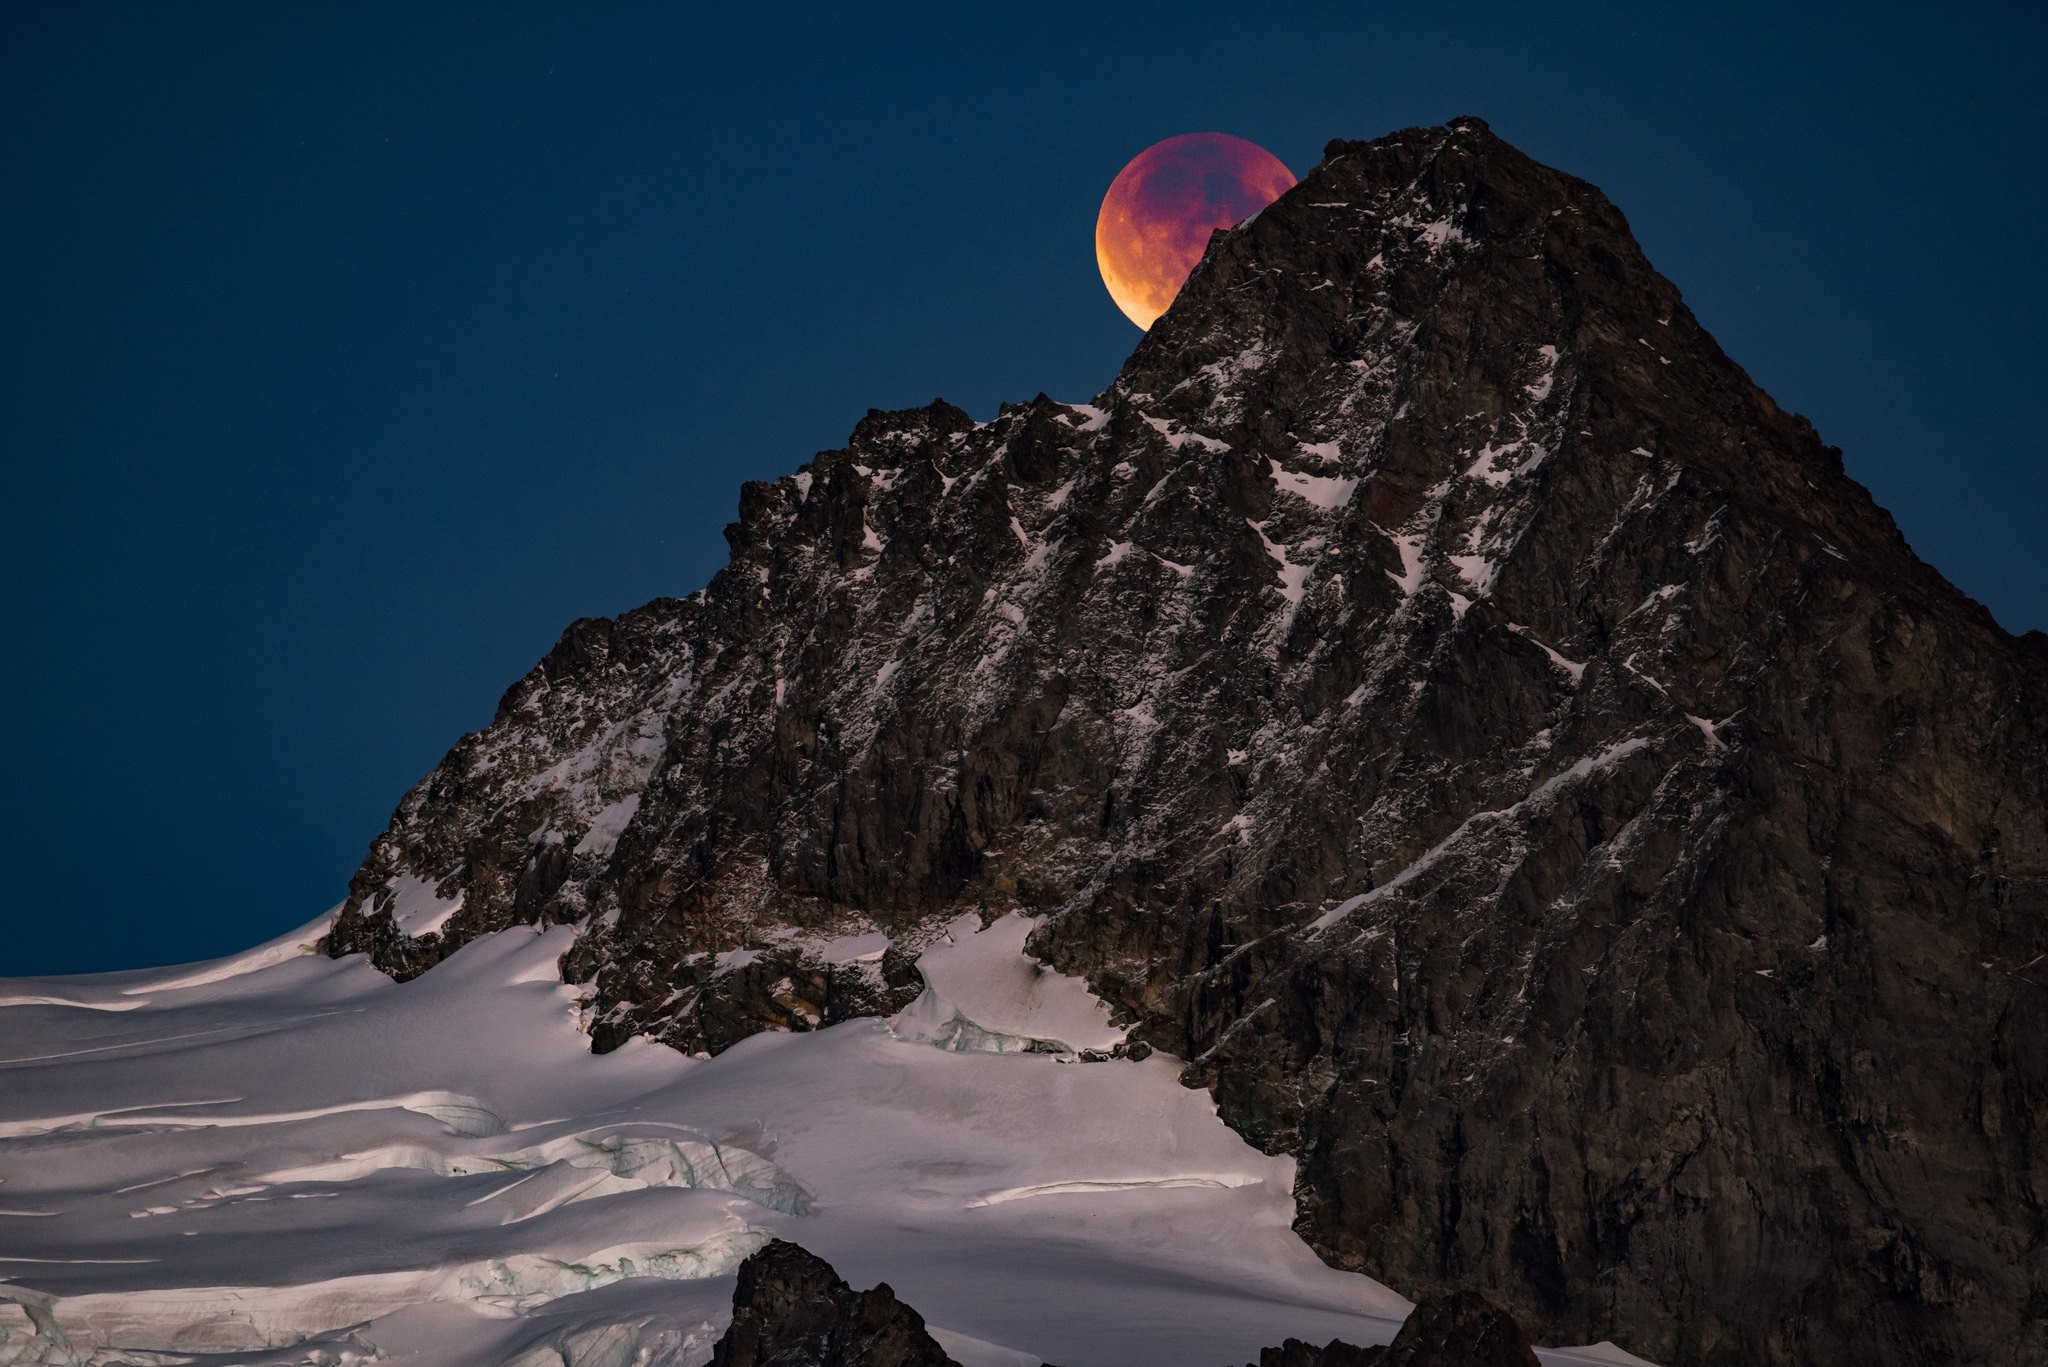 General 2048x1367 photography nature landscape snowy peak Moon mountains blue sky national park Washington state